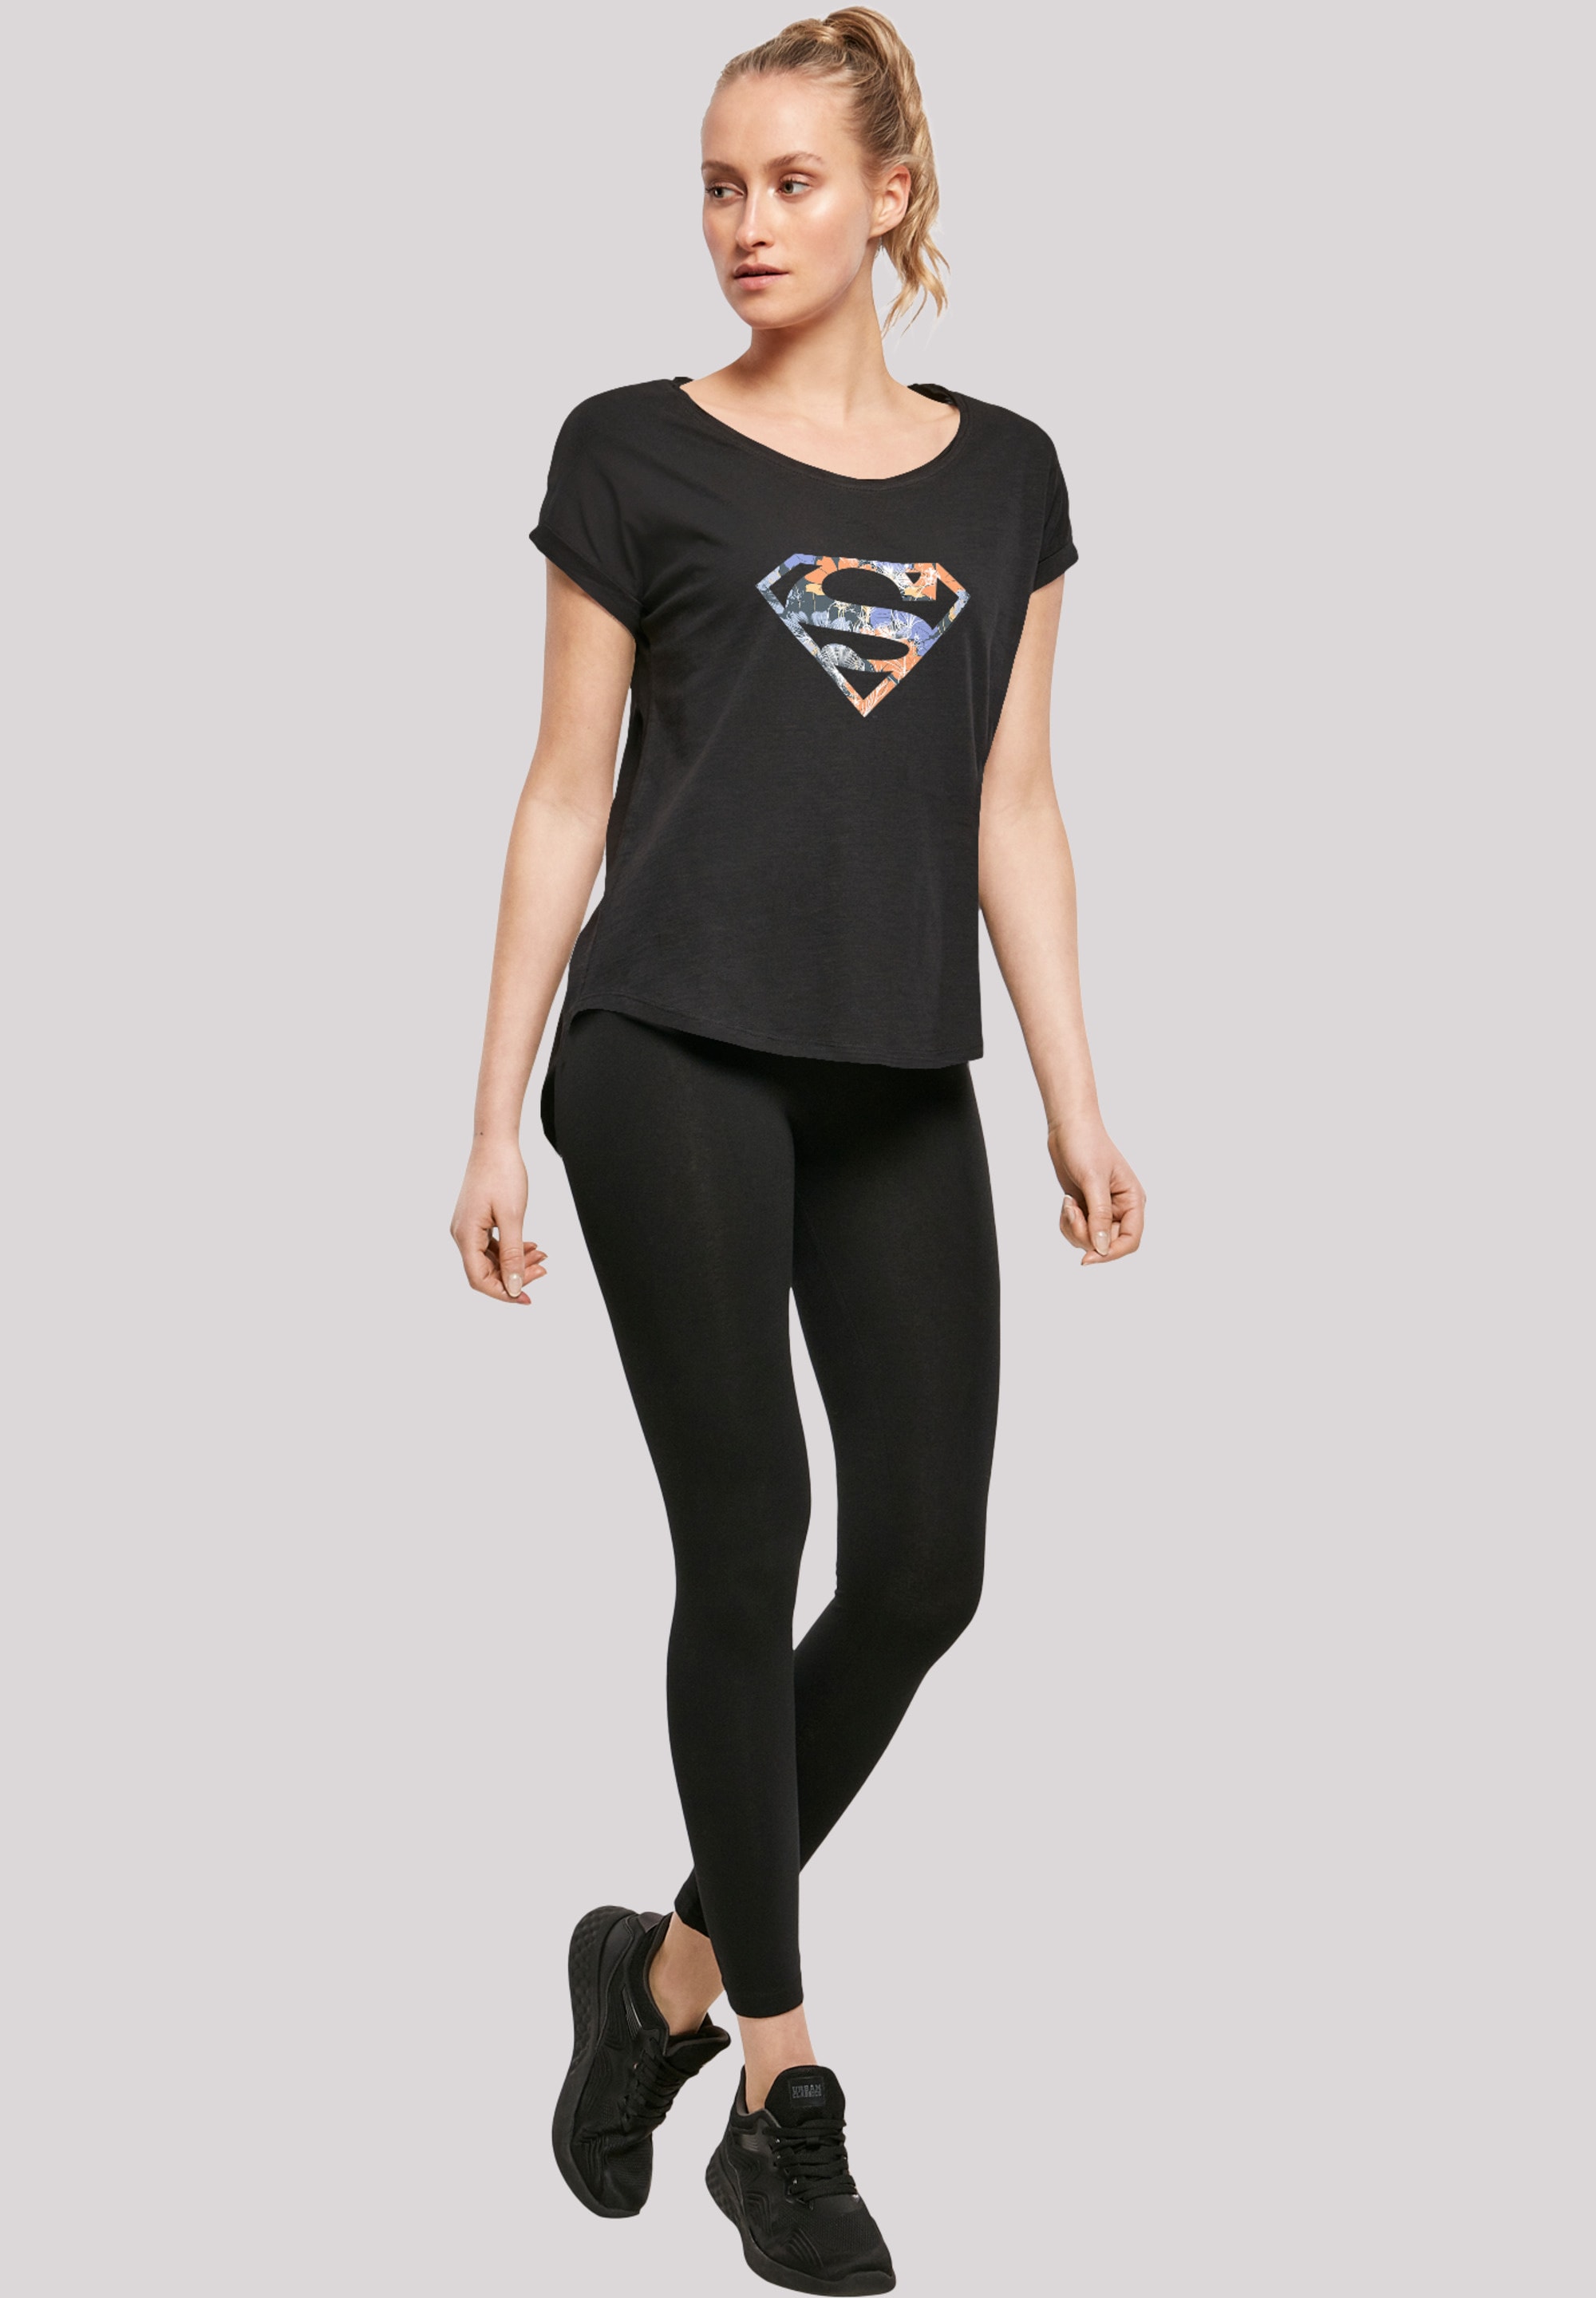 bestellen Superheld«, Logo walking F4NT4STIC T-Shirt DC I\'m Superman »Long Print Cut Comics T-Shirt Floral |